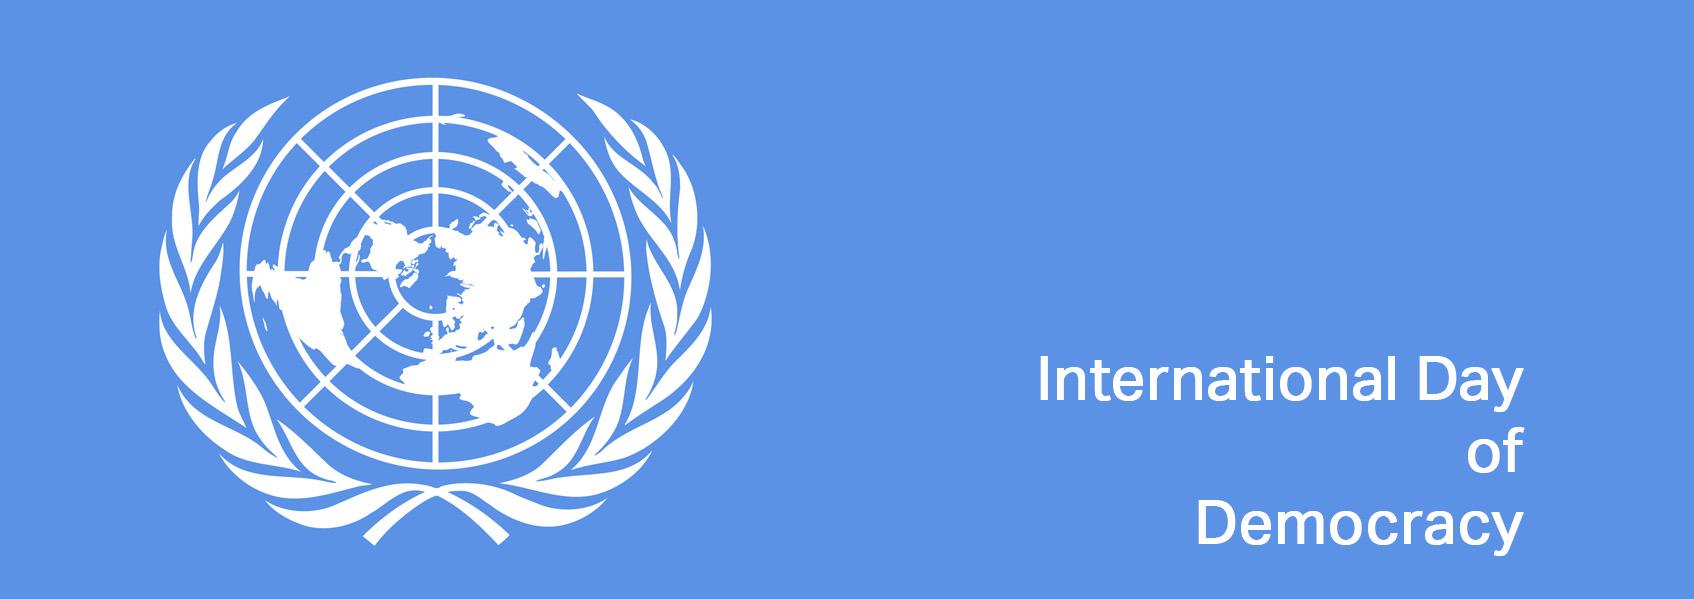 International Day of Democracy UN Logo Header Image